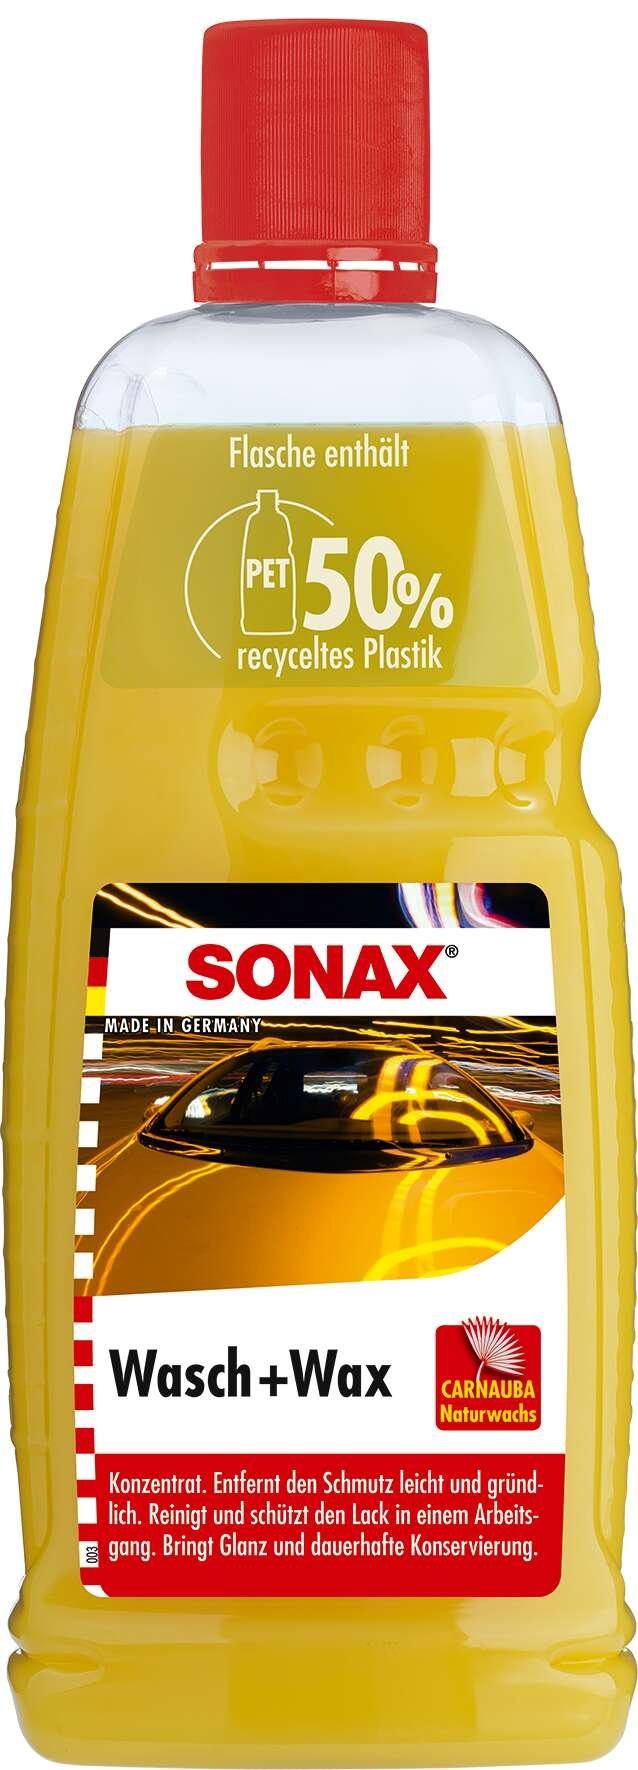 SONAX Wash + Wax 1000 ml PET bottle